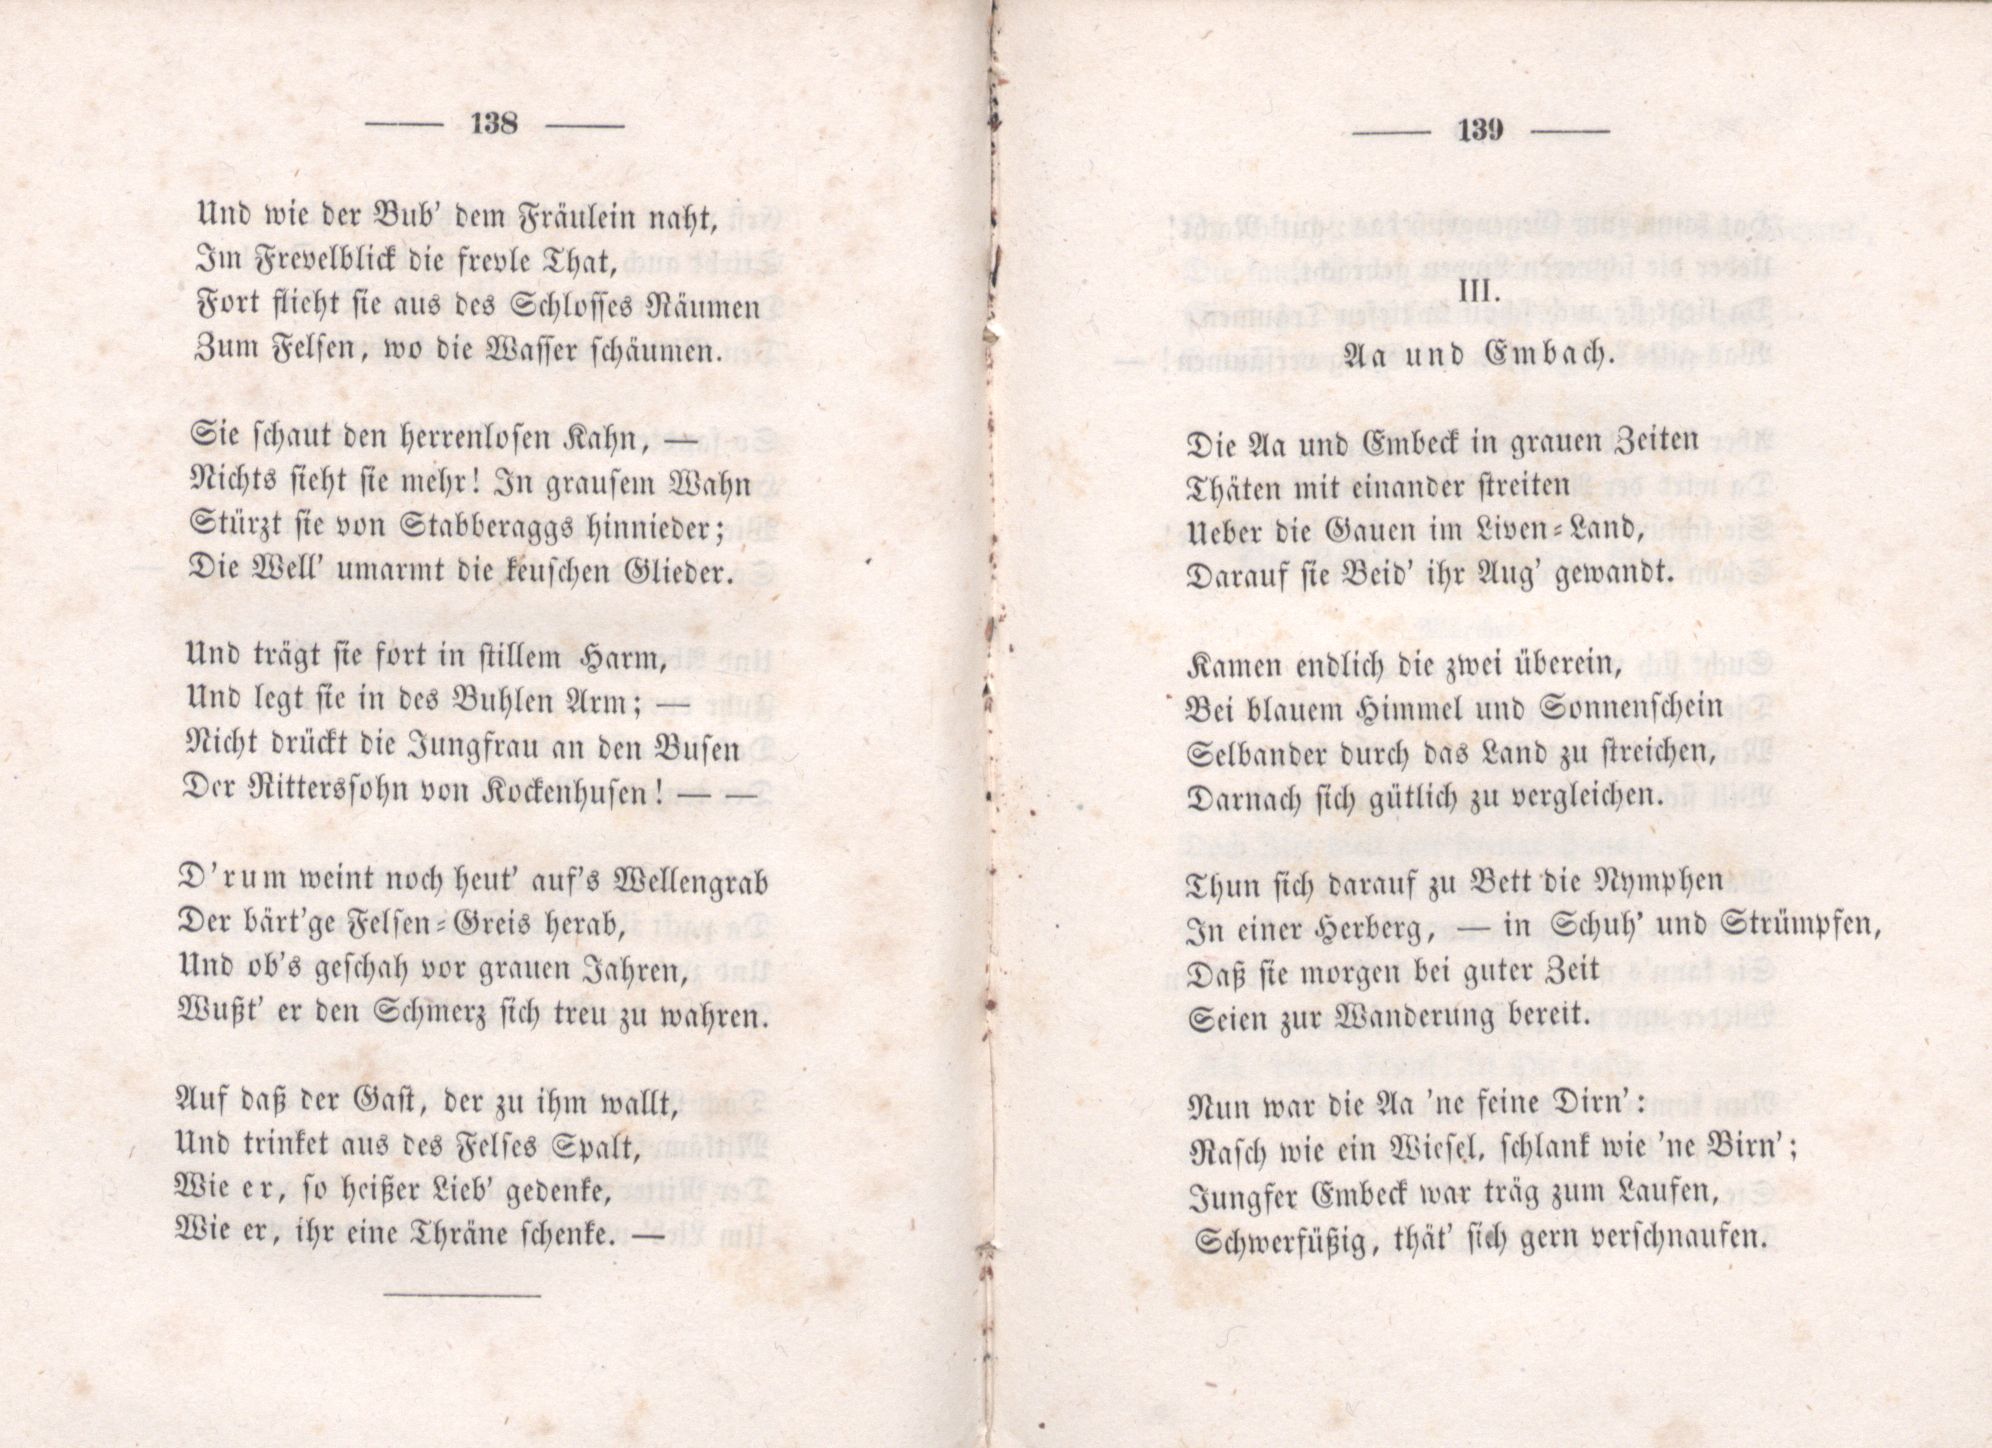 Aa und Embach (1851) | 1. (138-139) Основной текст